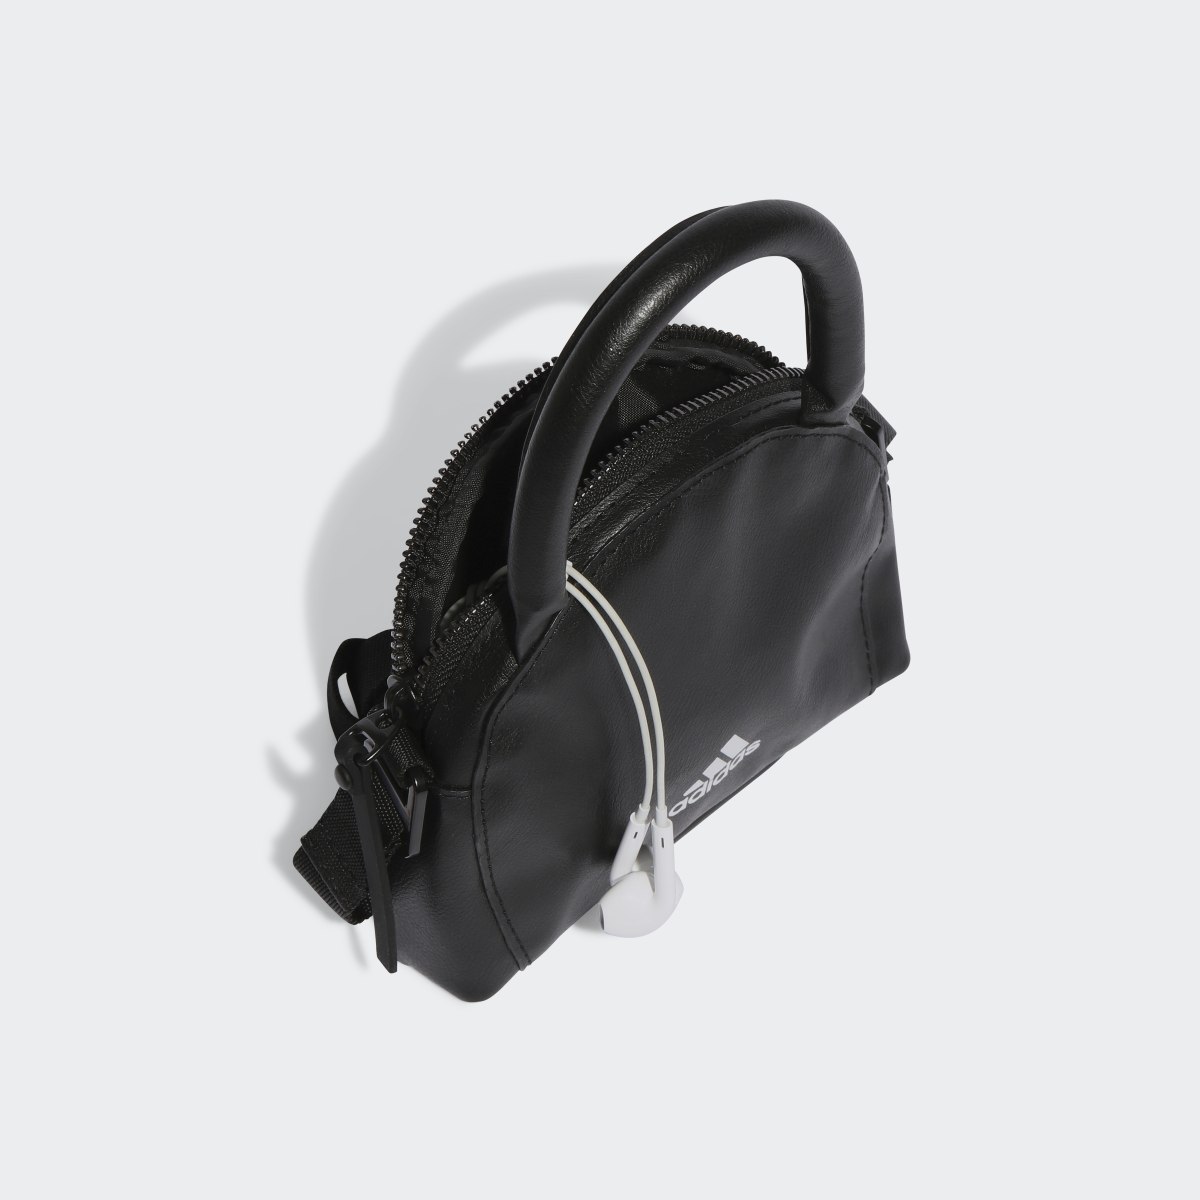 Adidas Unisex PU Kettle Bag. 5